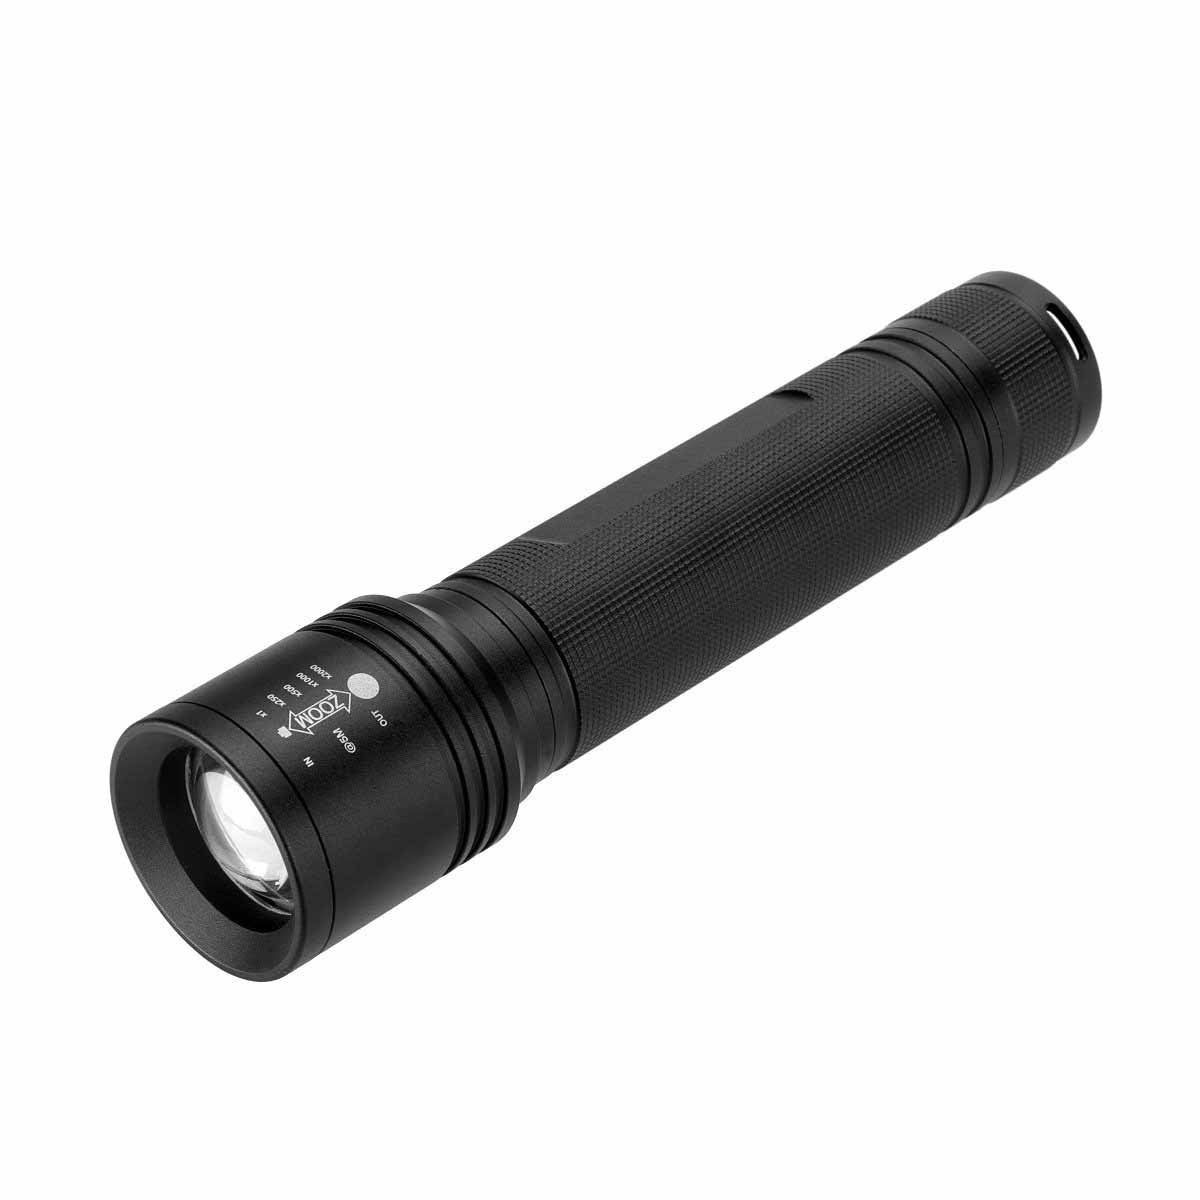 High-Powered LED Handheld Flashlight with Zoom